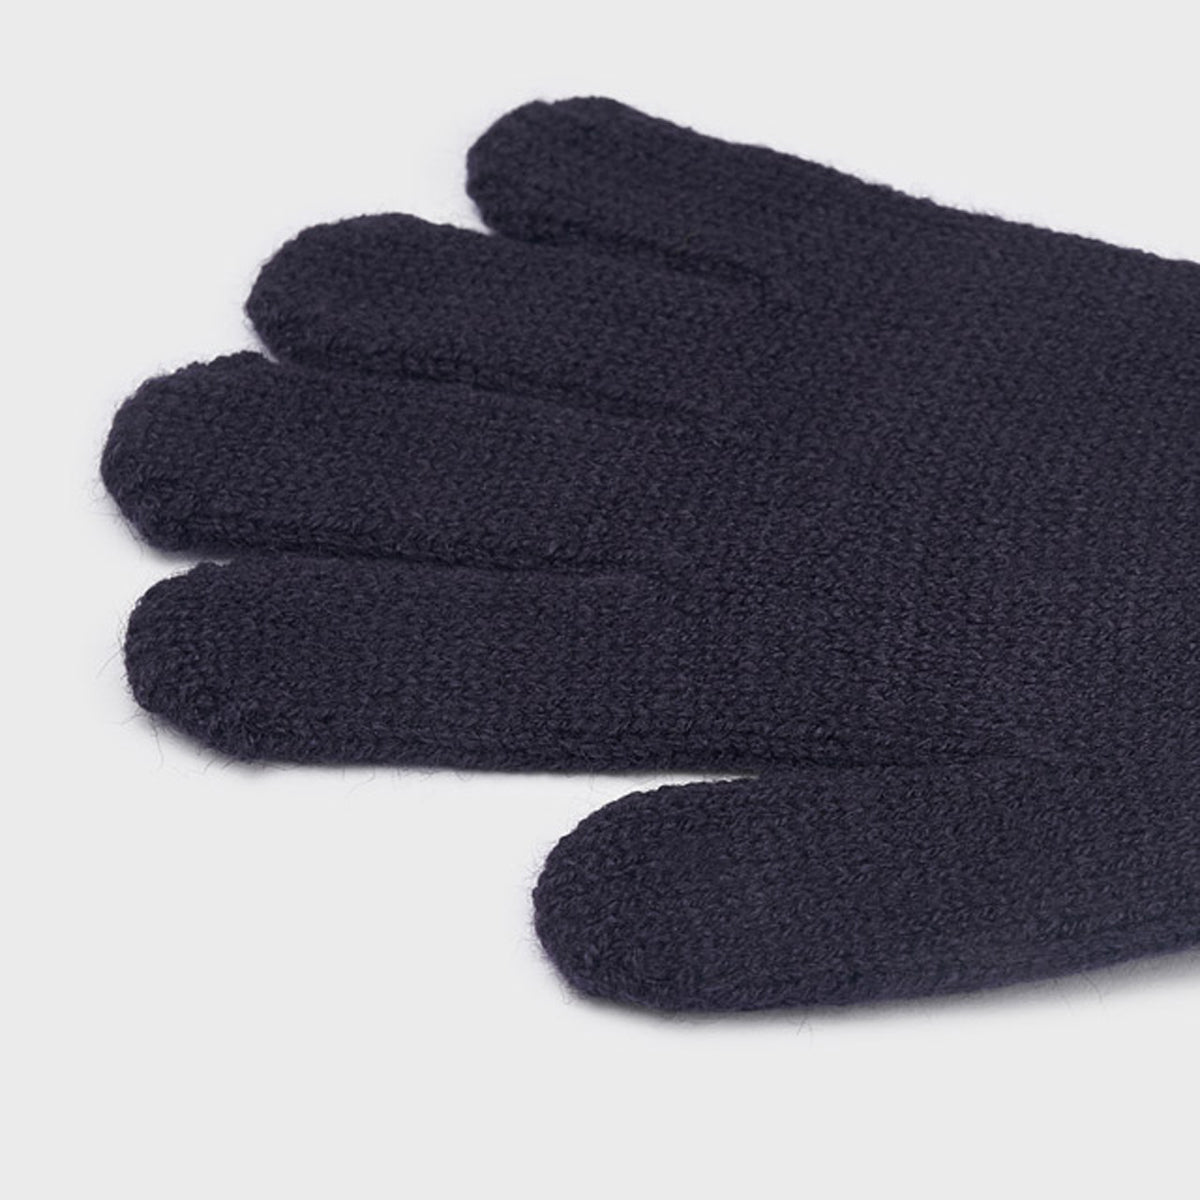 Navy Blue Gloves